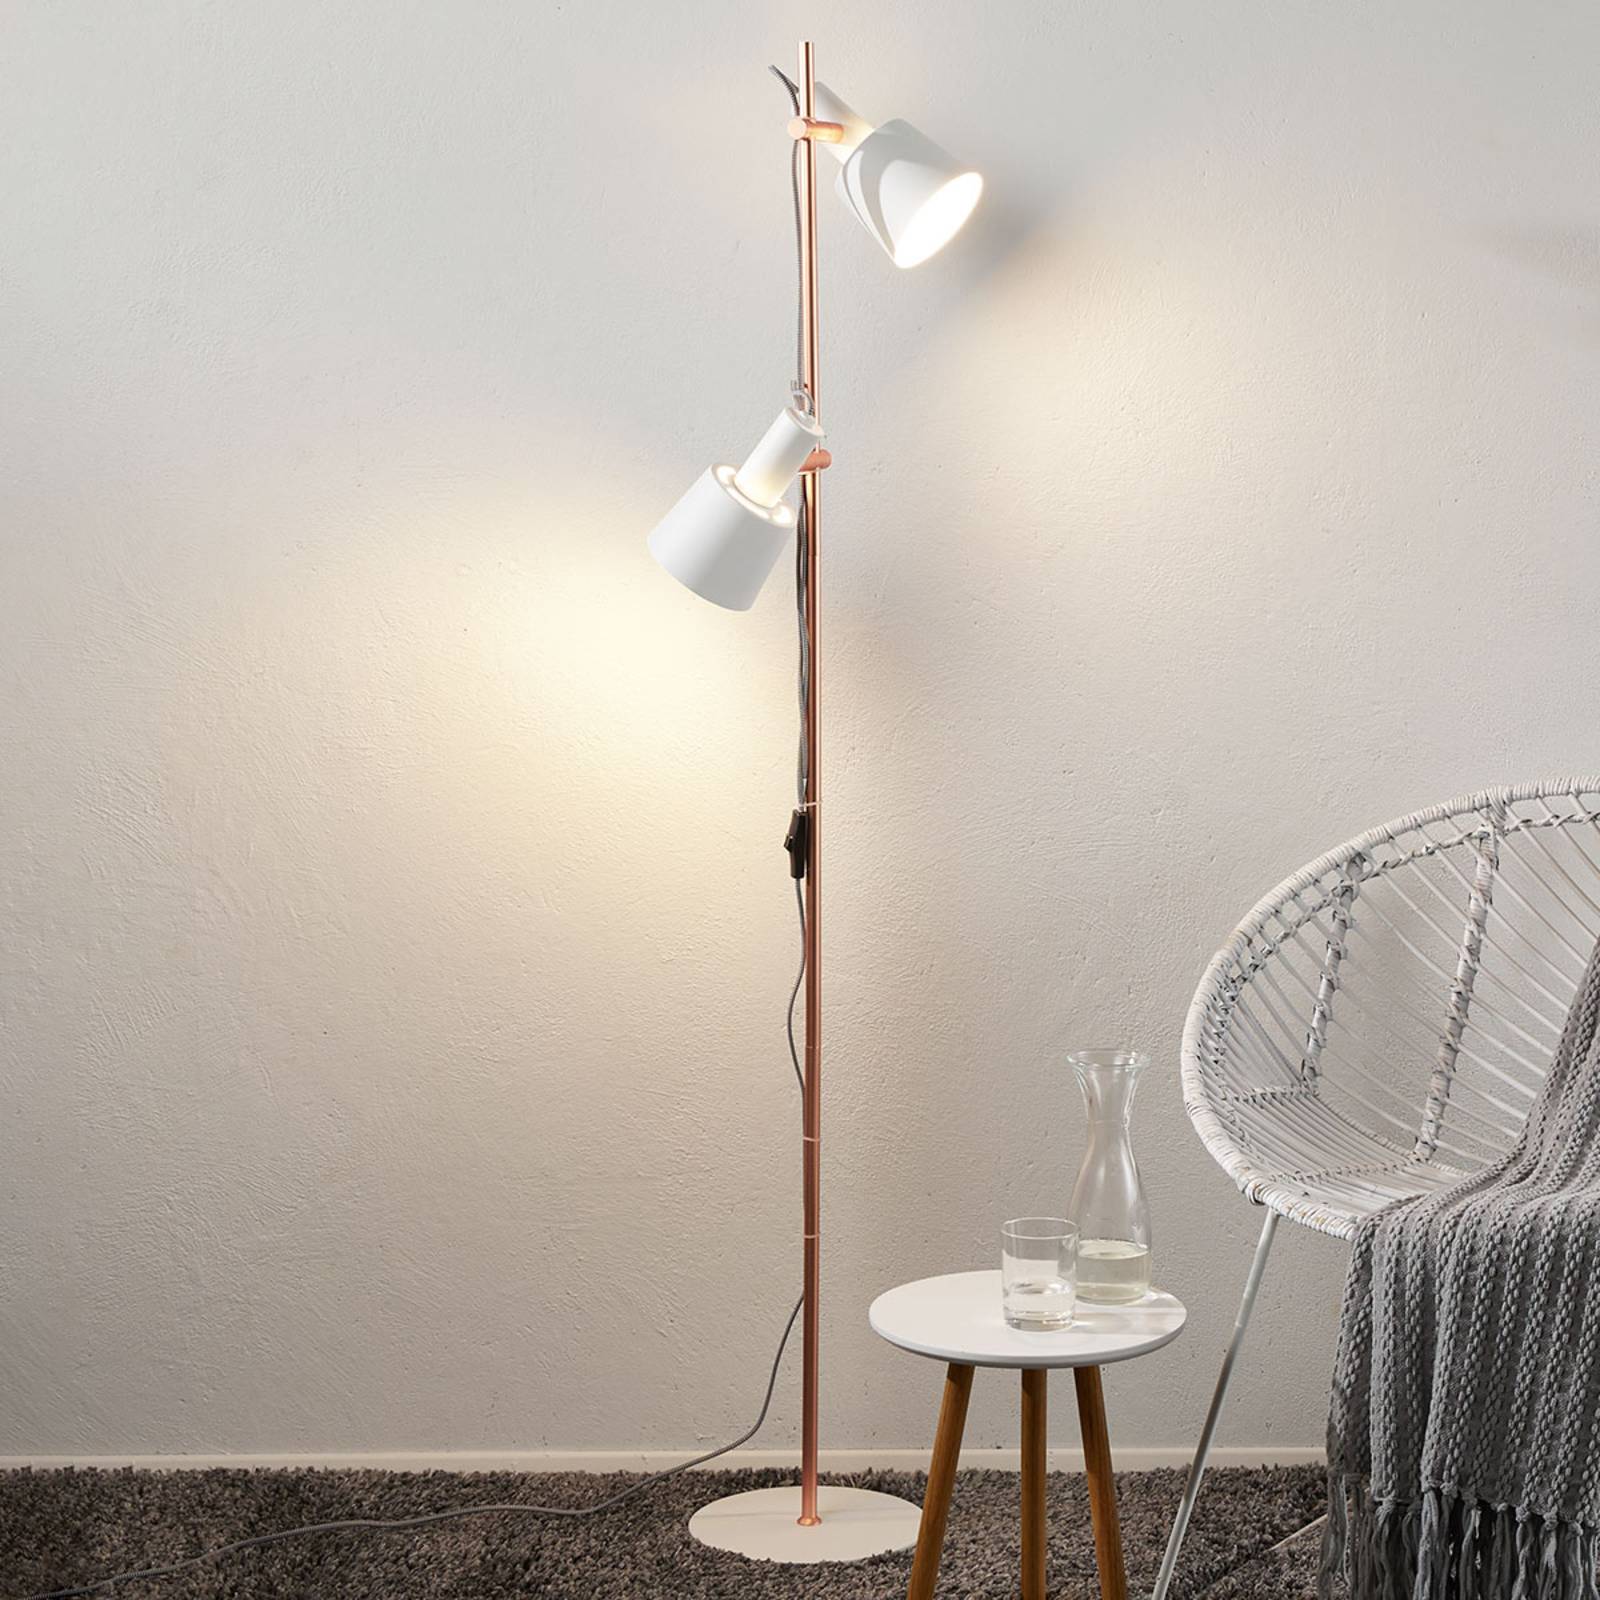 2-lamps vloerlamp Haldar in wit/koper